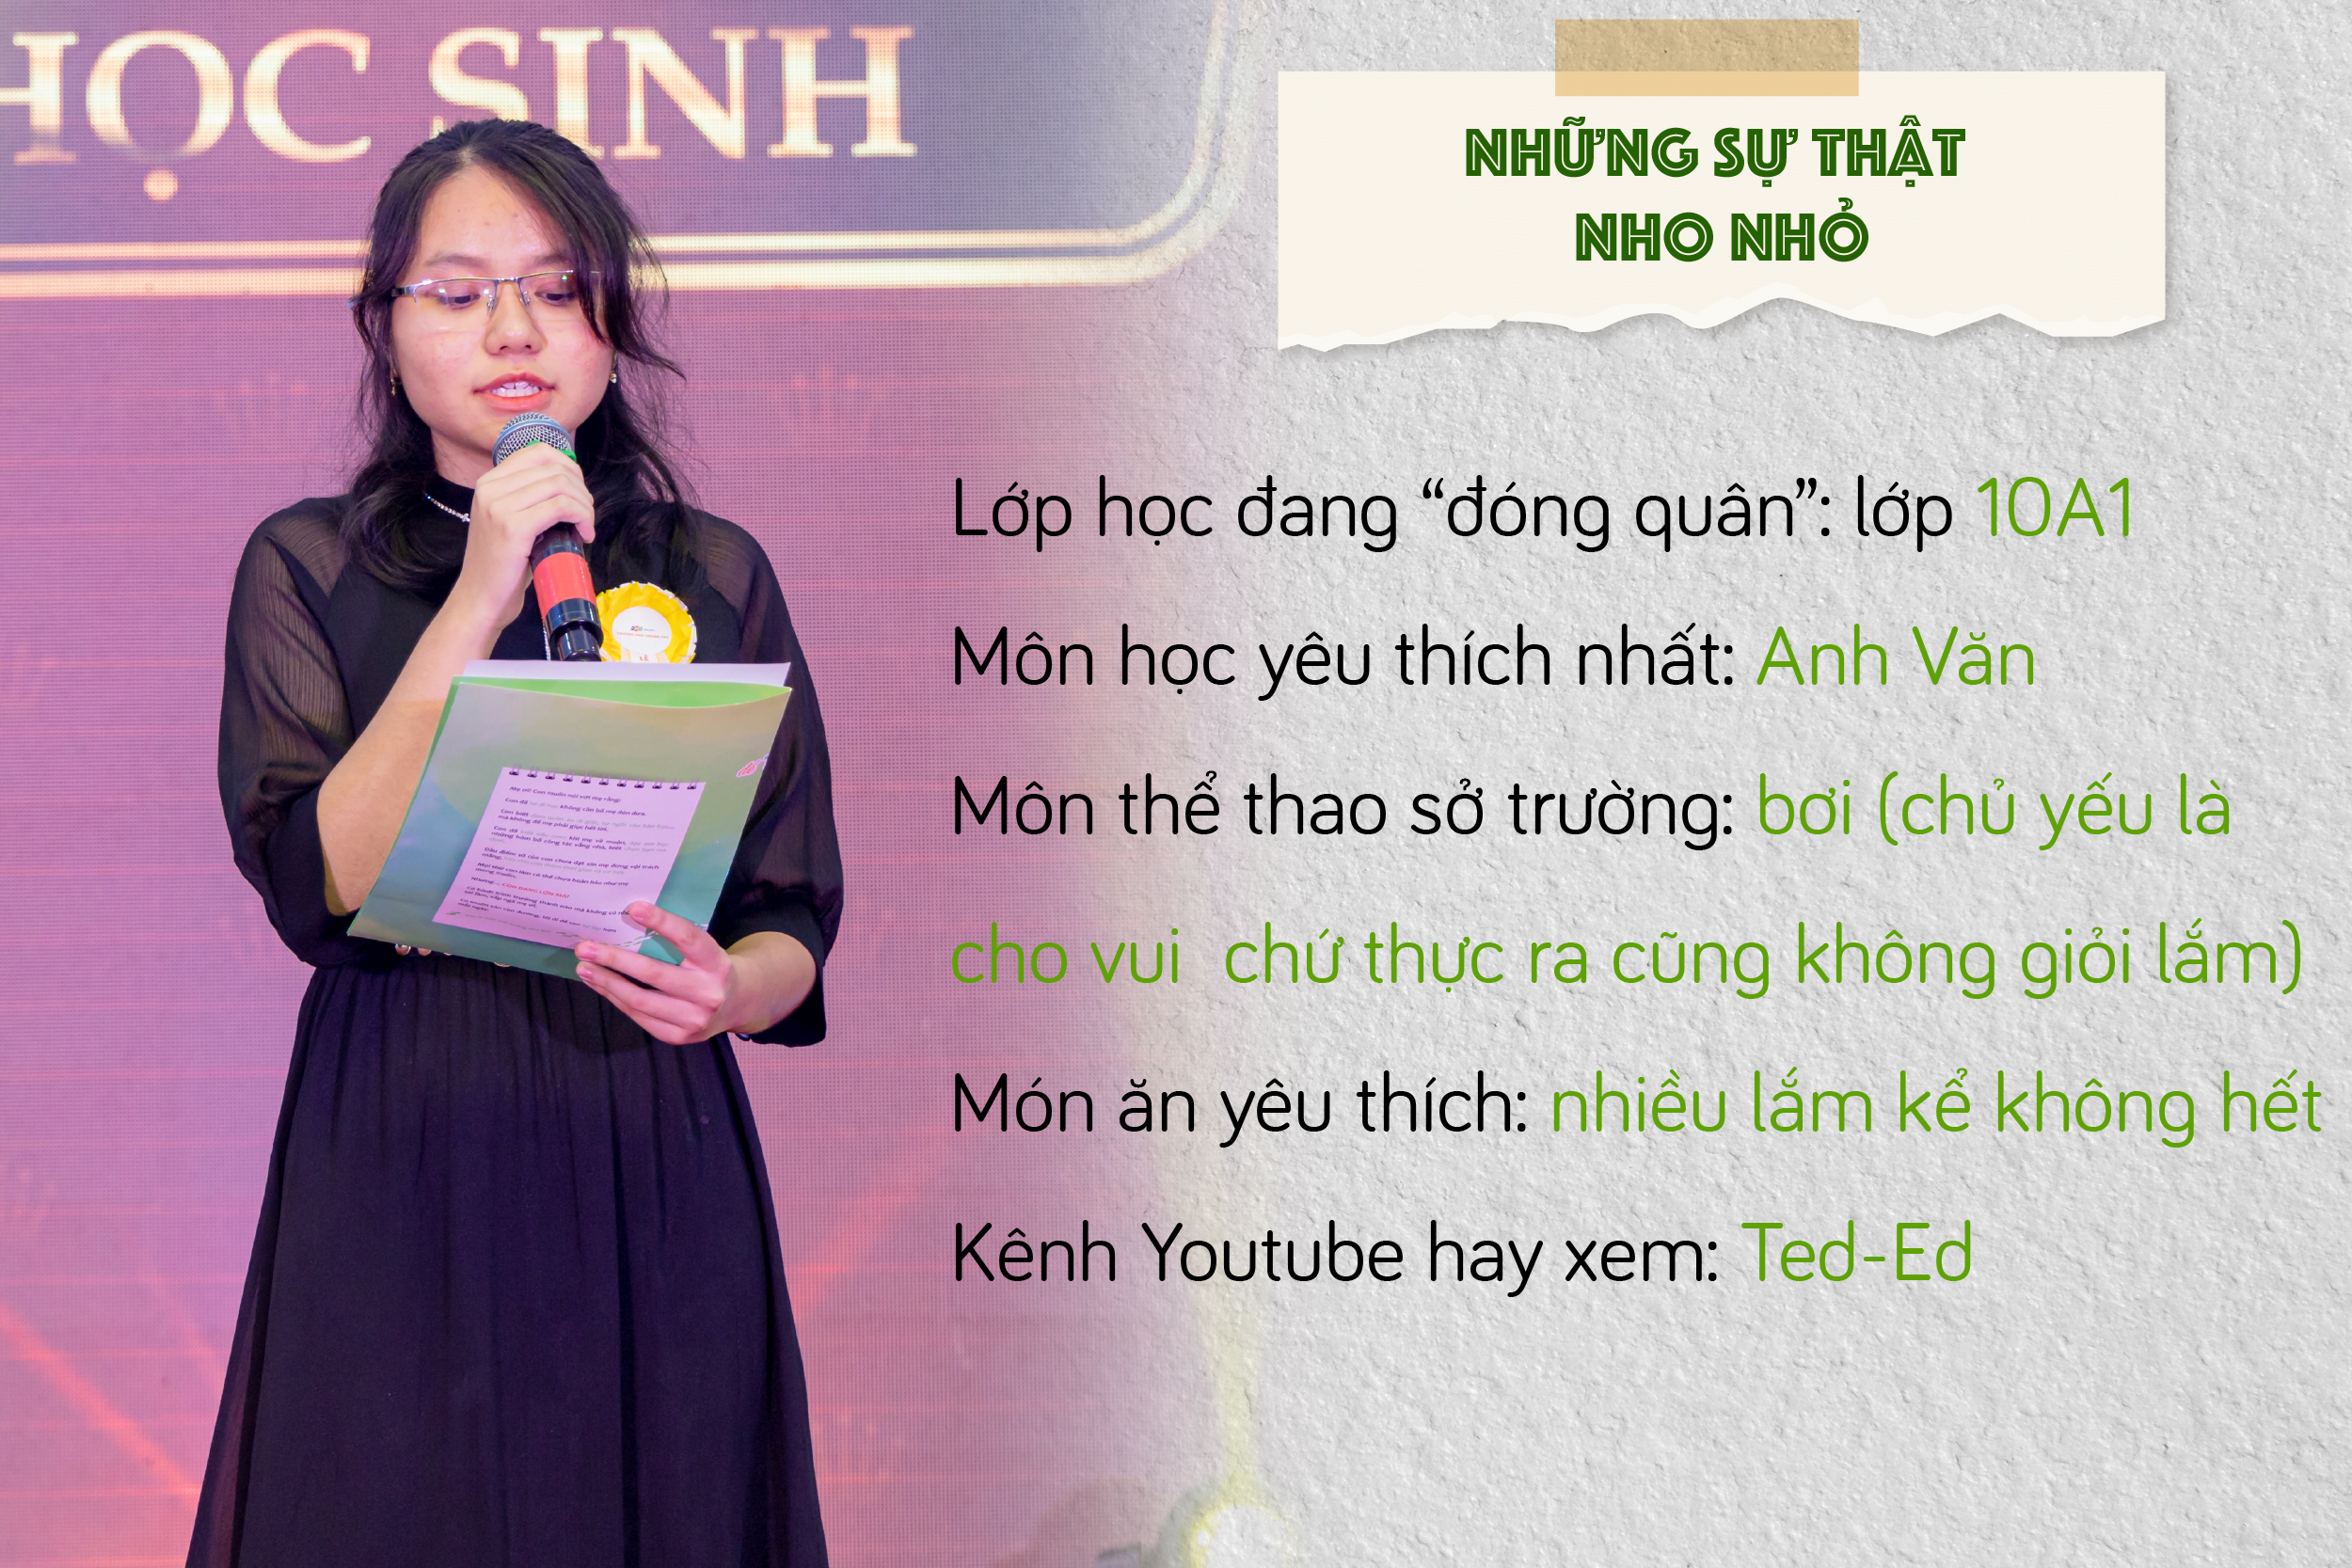 Nguyen-Ngoc-Thien-An-Khung-Long-Vang-4